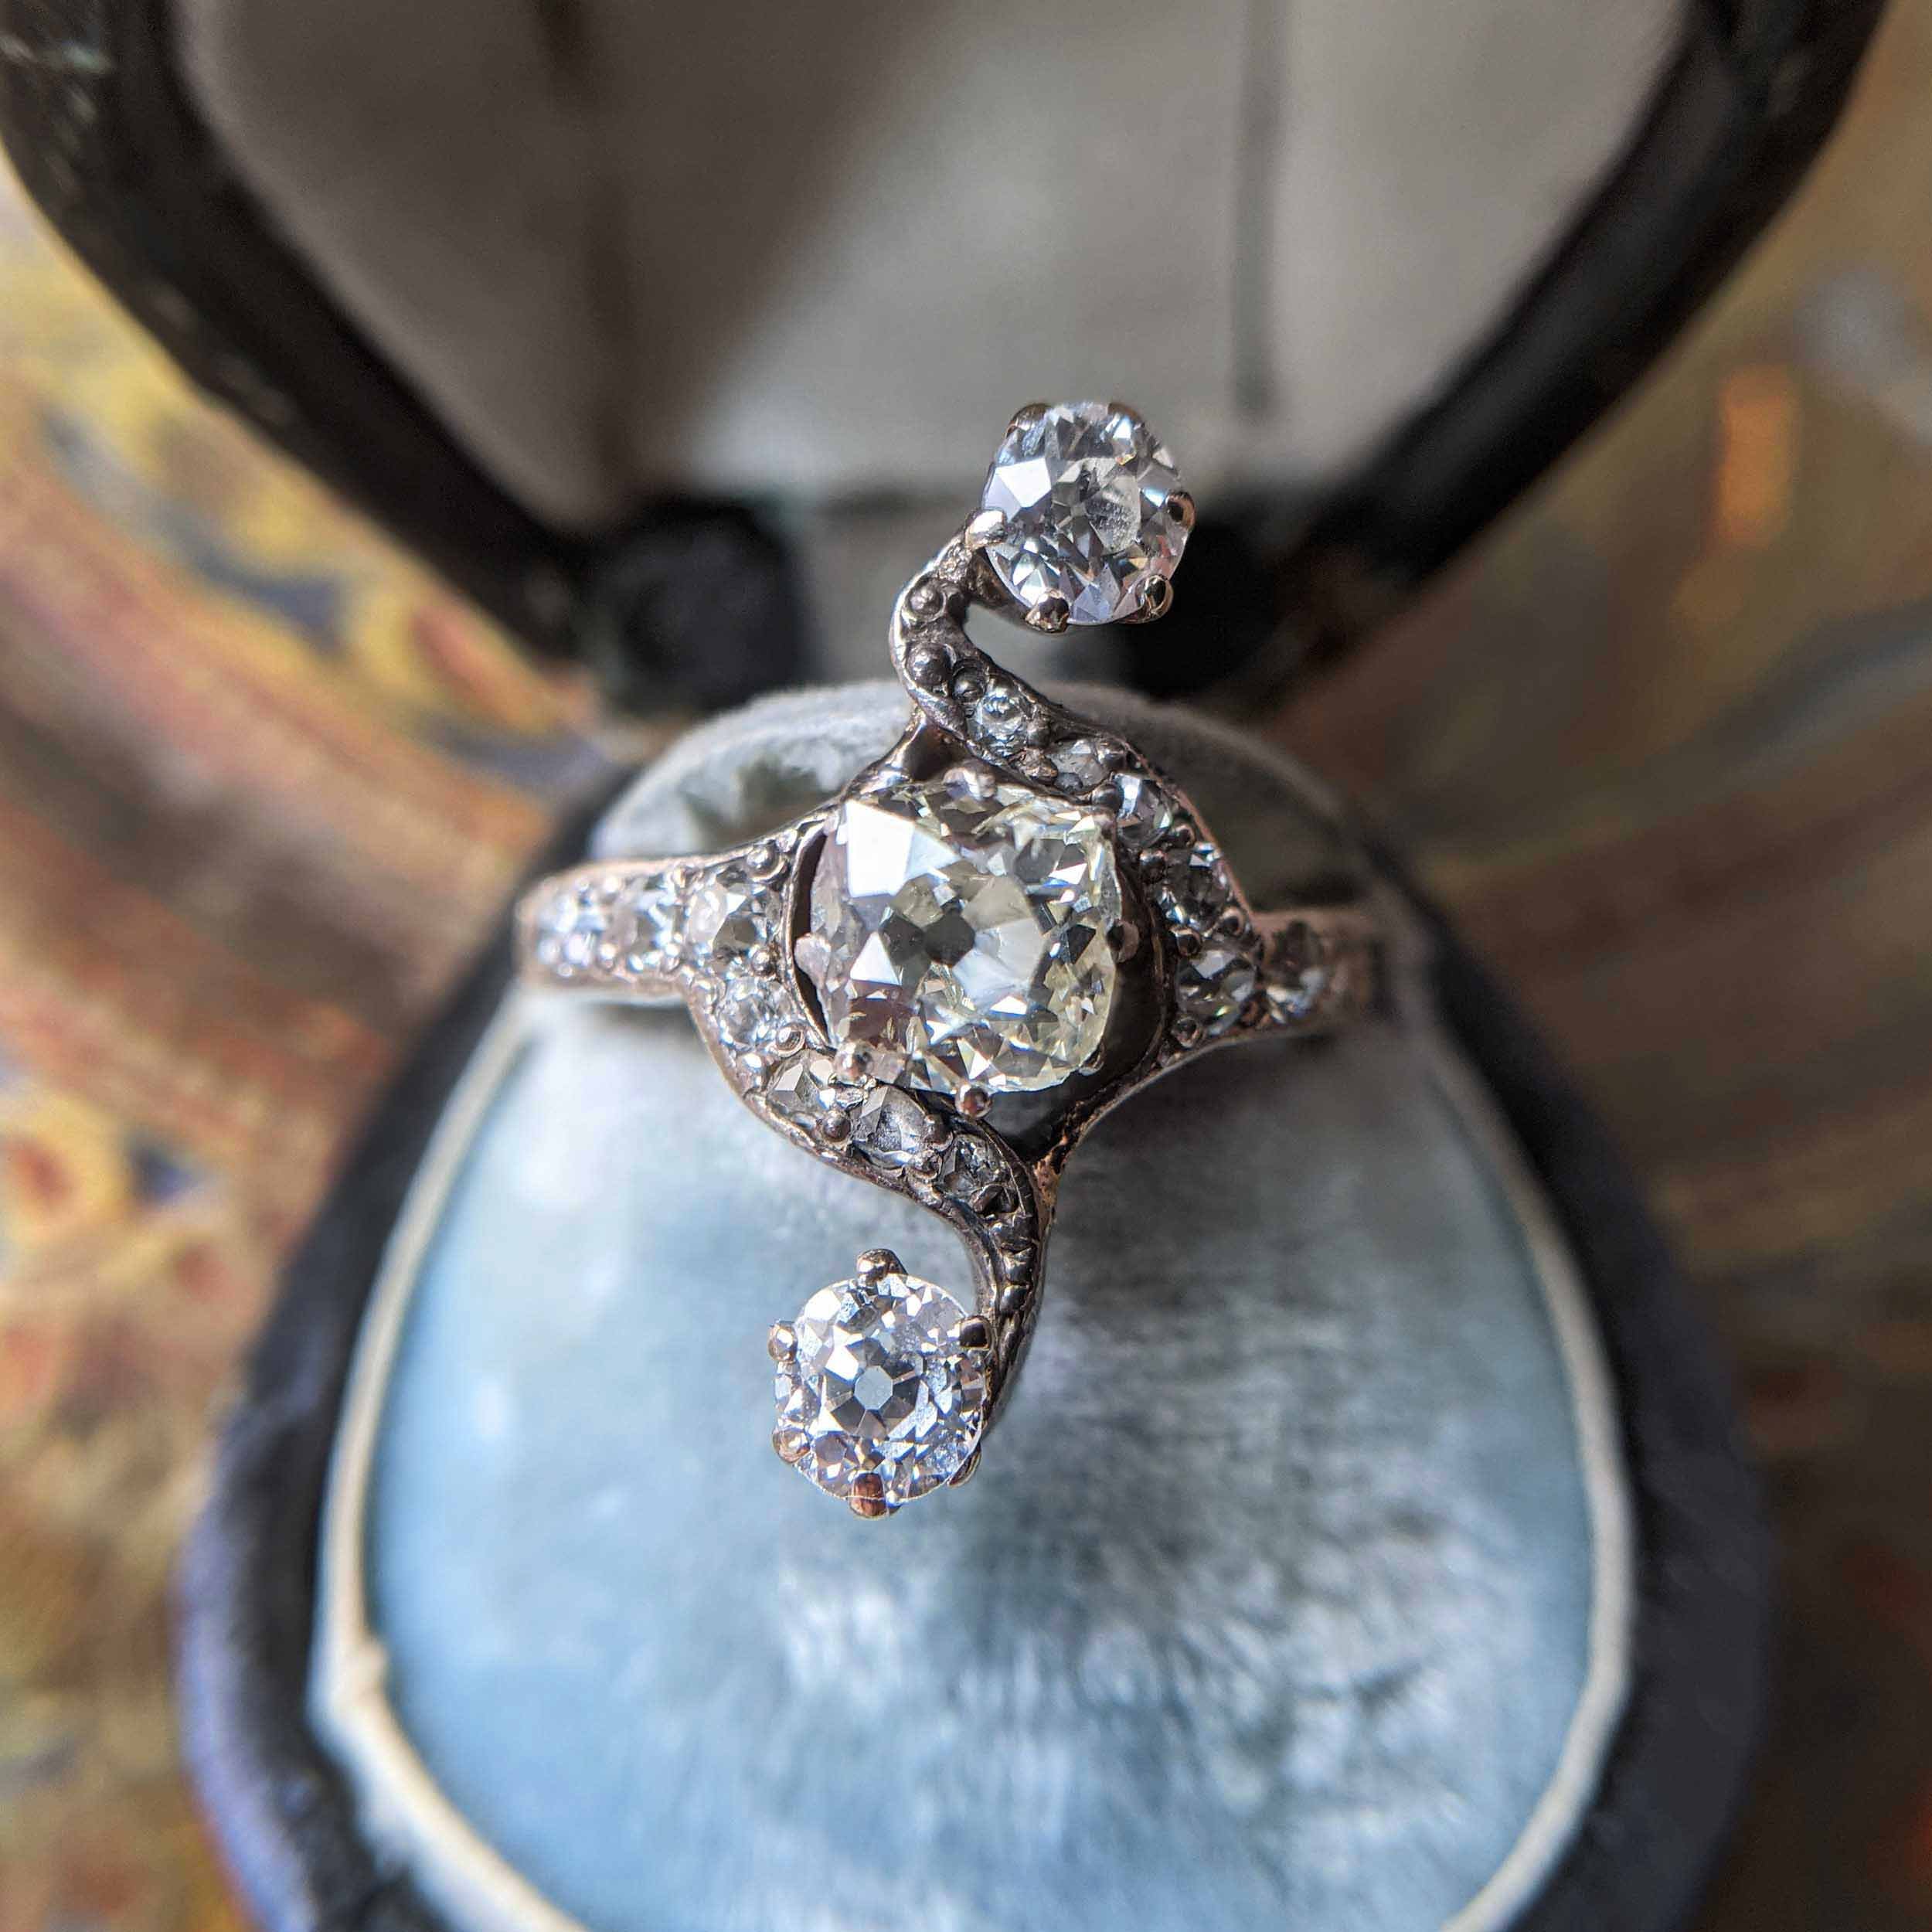 4 Carat Old Mine Cut Diamond Engagement Ring 4.12ct M/SI2 GIA | Antique  diamond rings, European cut engagement rings, Antique cushion cut diamond